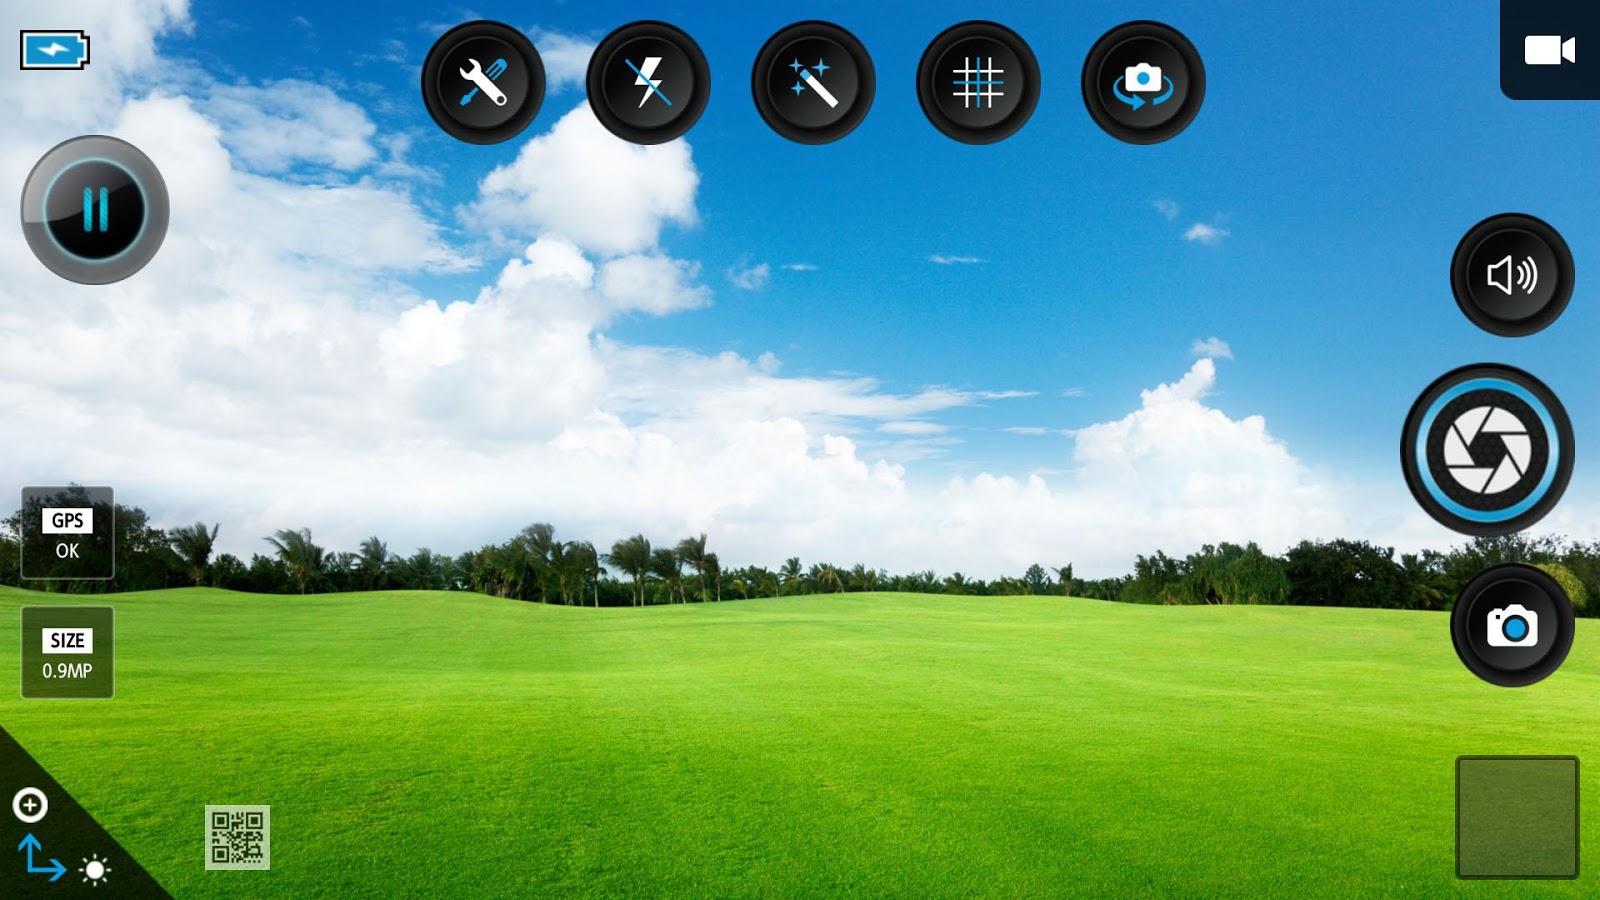  Download Aplikasi Apk Android Gratis -  screenshot